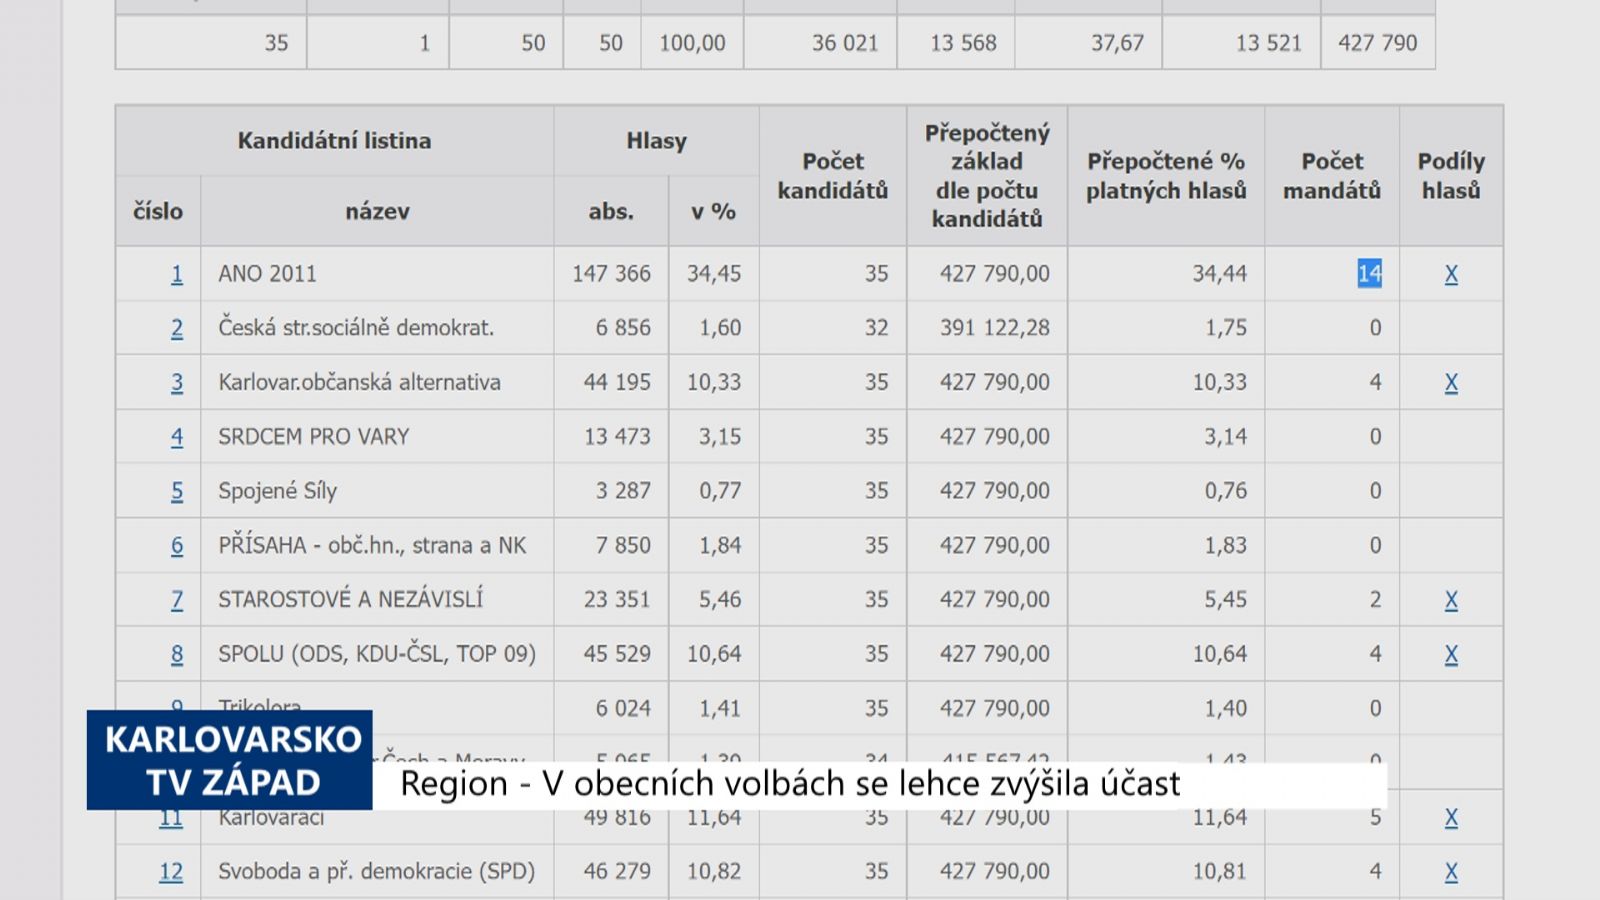 Region: V obecních volbách se lehce zvýšila účast (TV Západ)